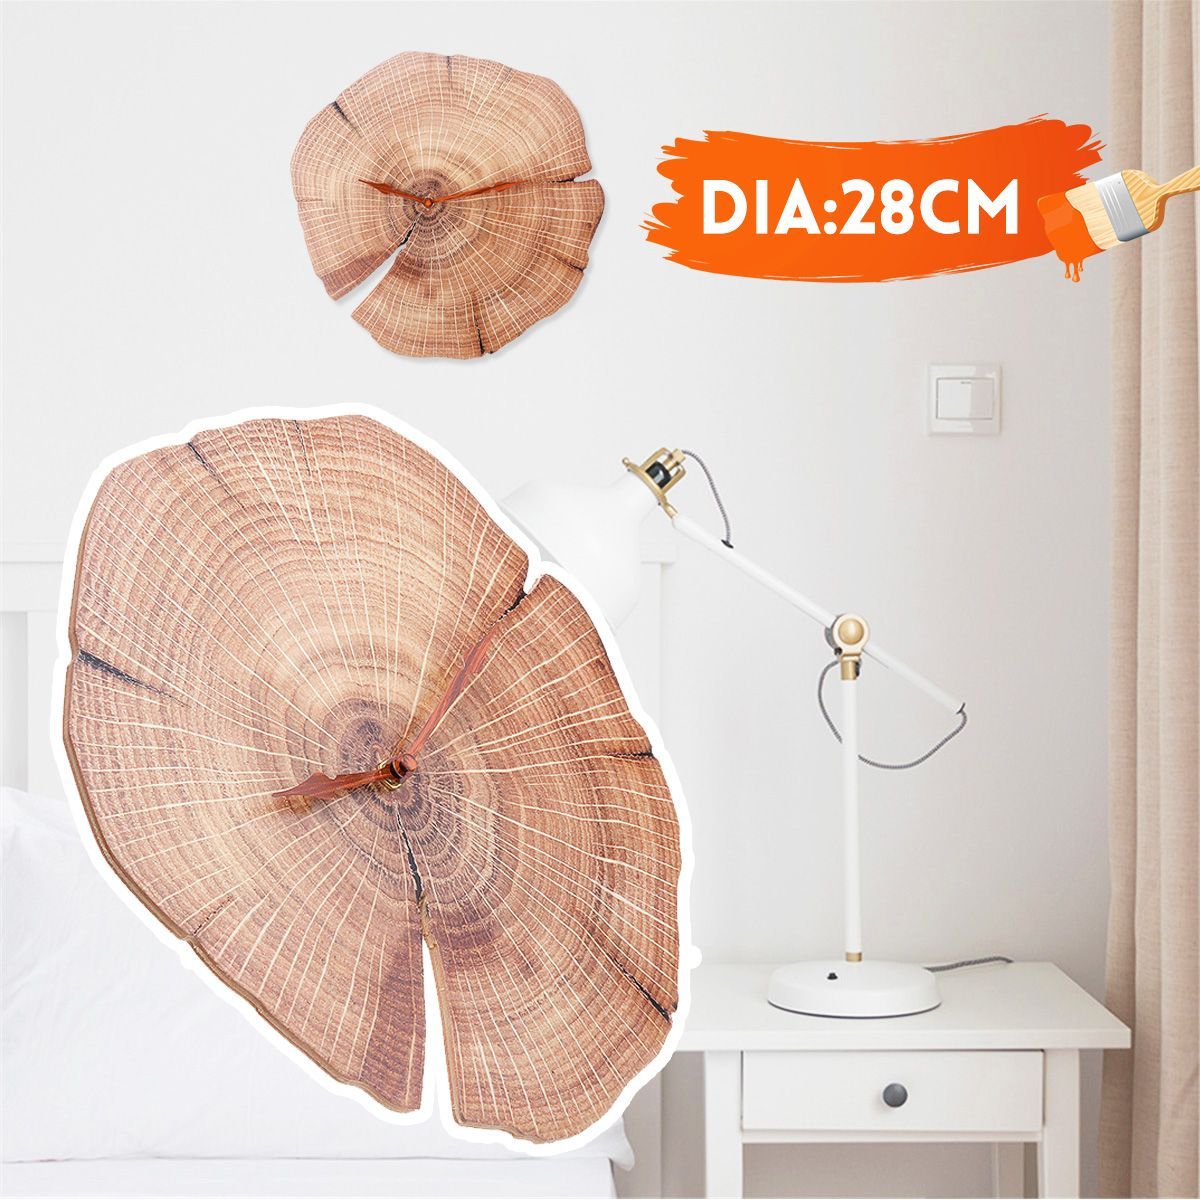 28cm-11-Retro-Round-Wooden-Wall-Clock-DIY-Room-Home-Office-Bar-Decoration-1485160